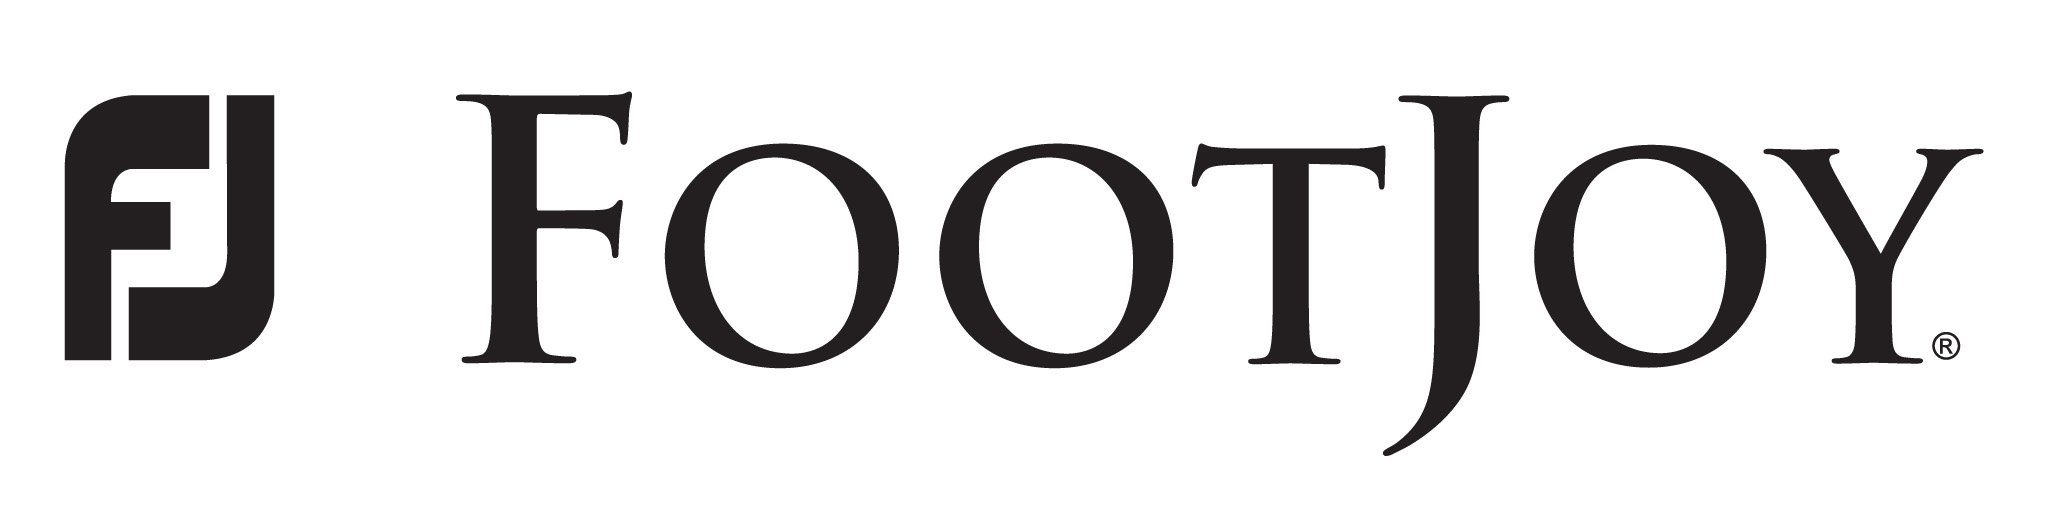 footjoy_logo2.jpg